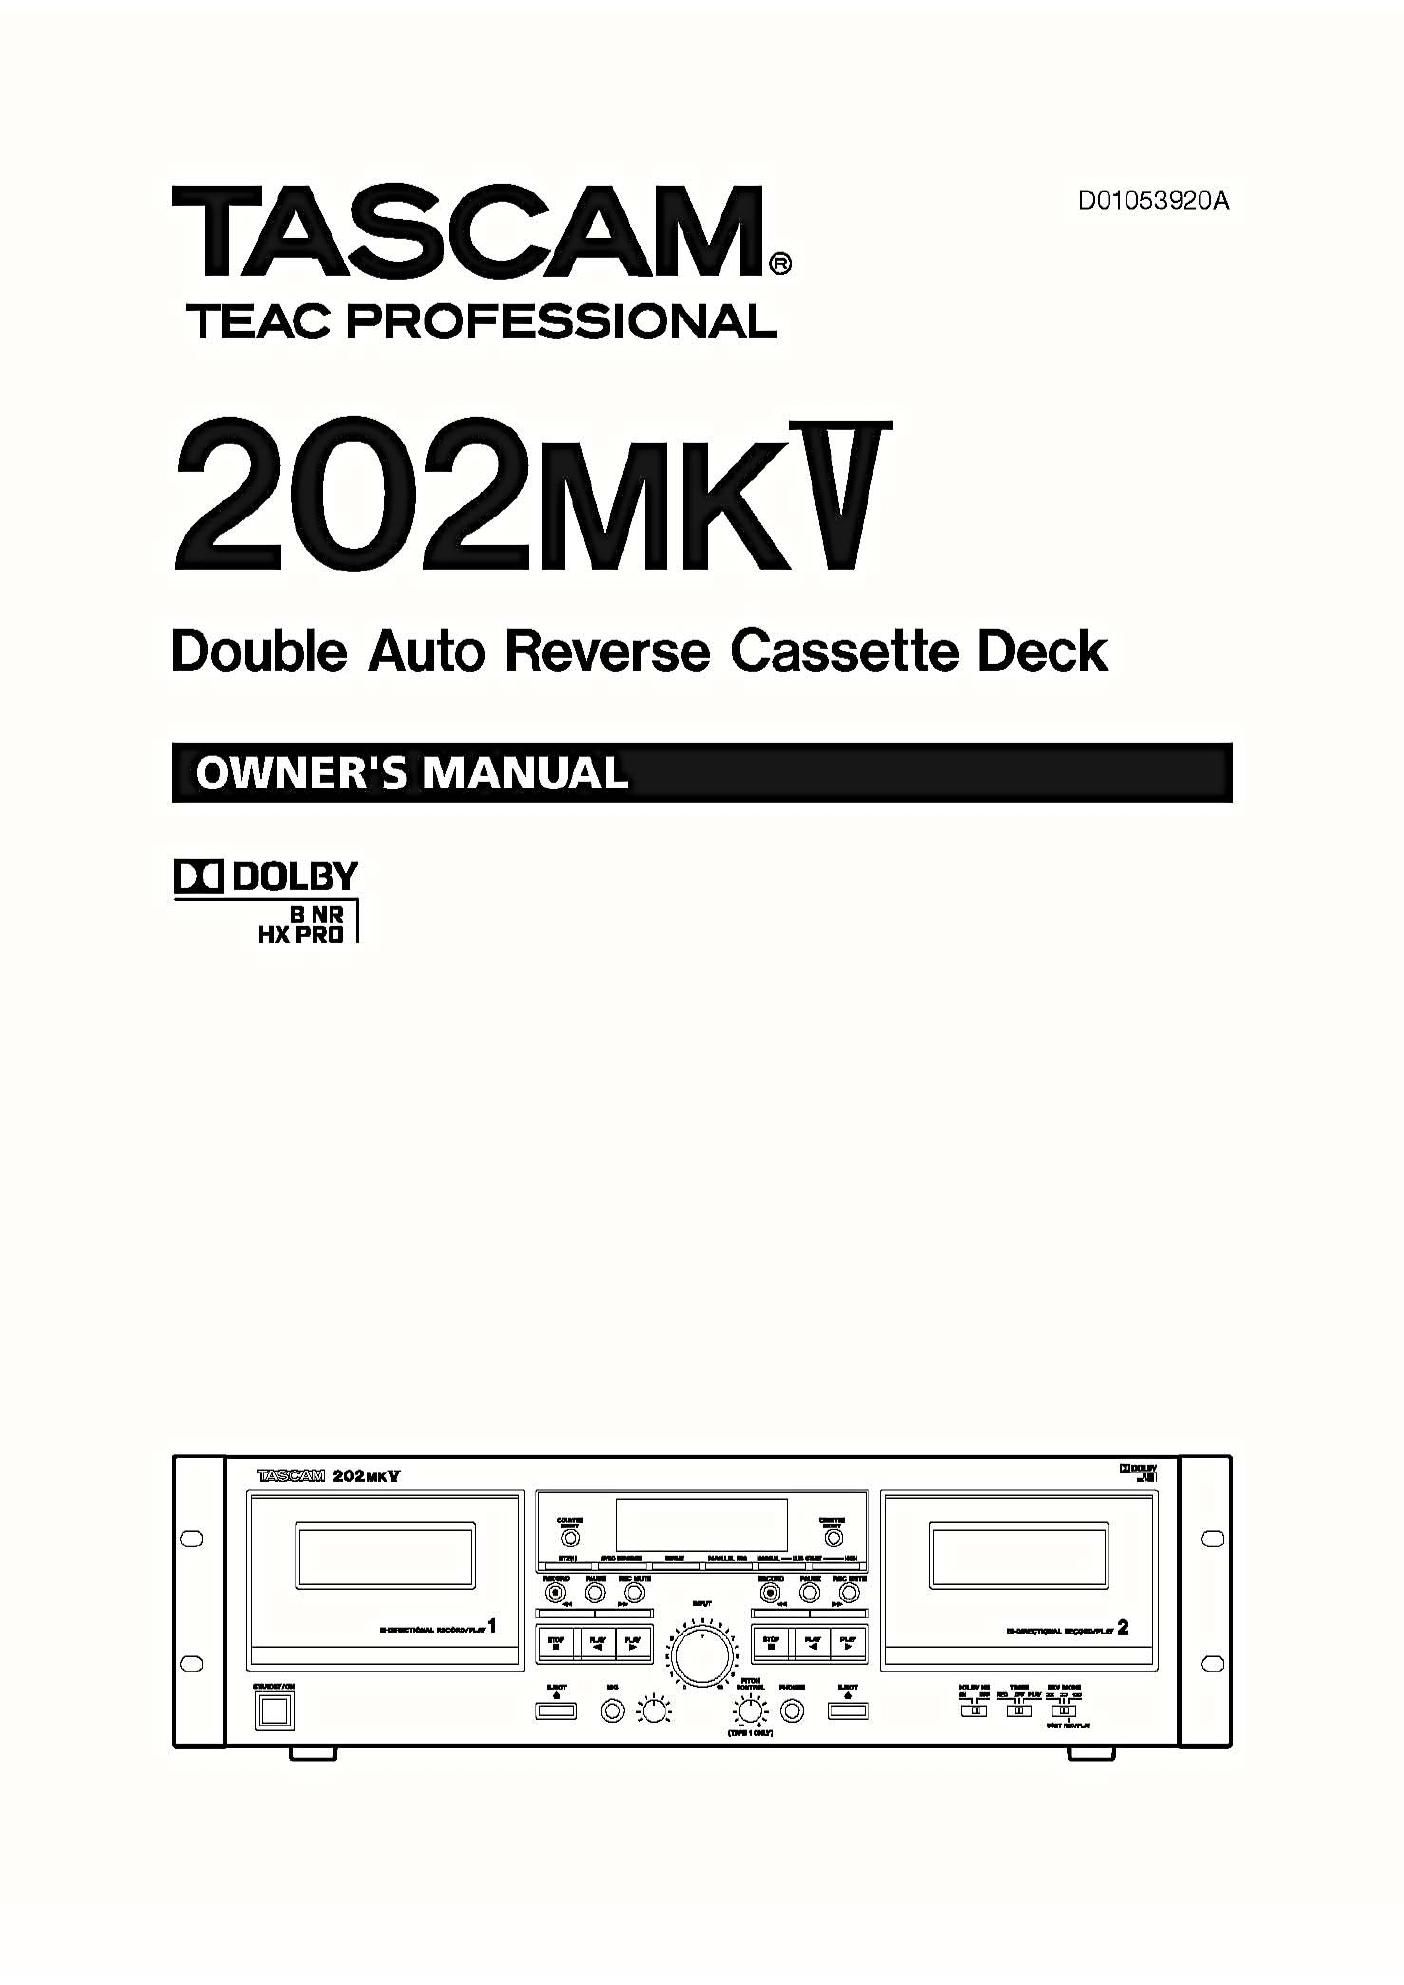 Tascam 202 Mk V Owners Manual